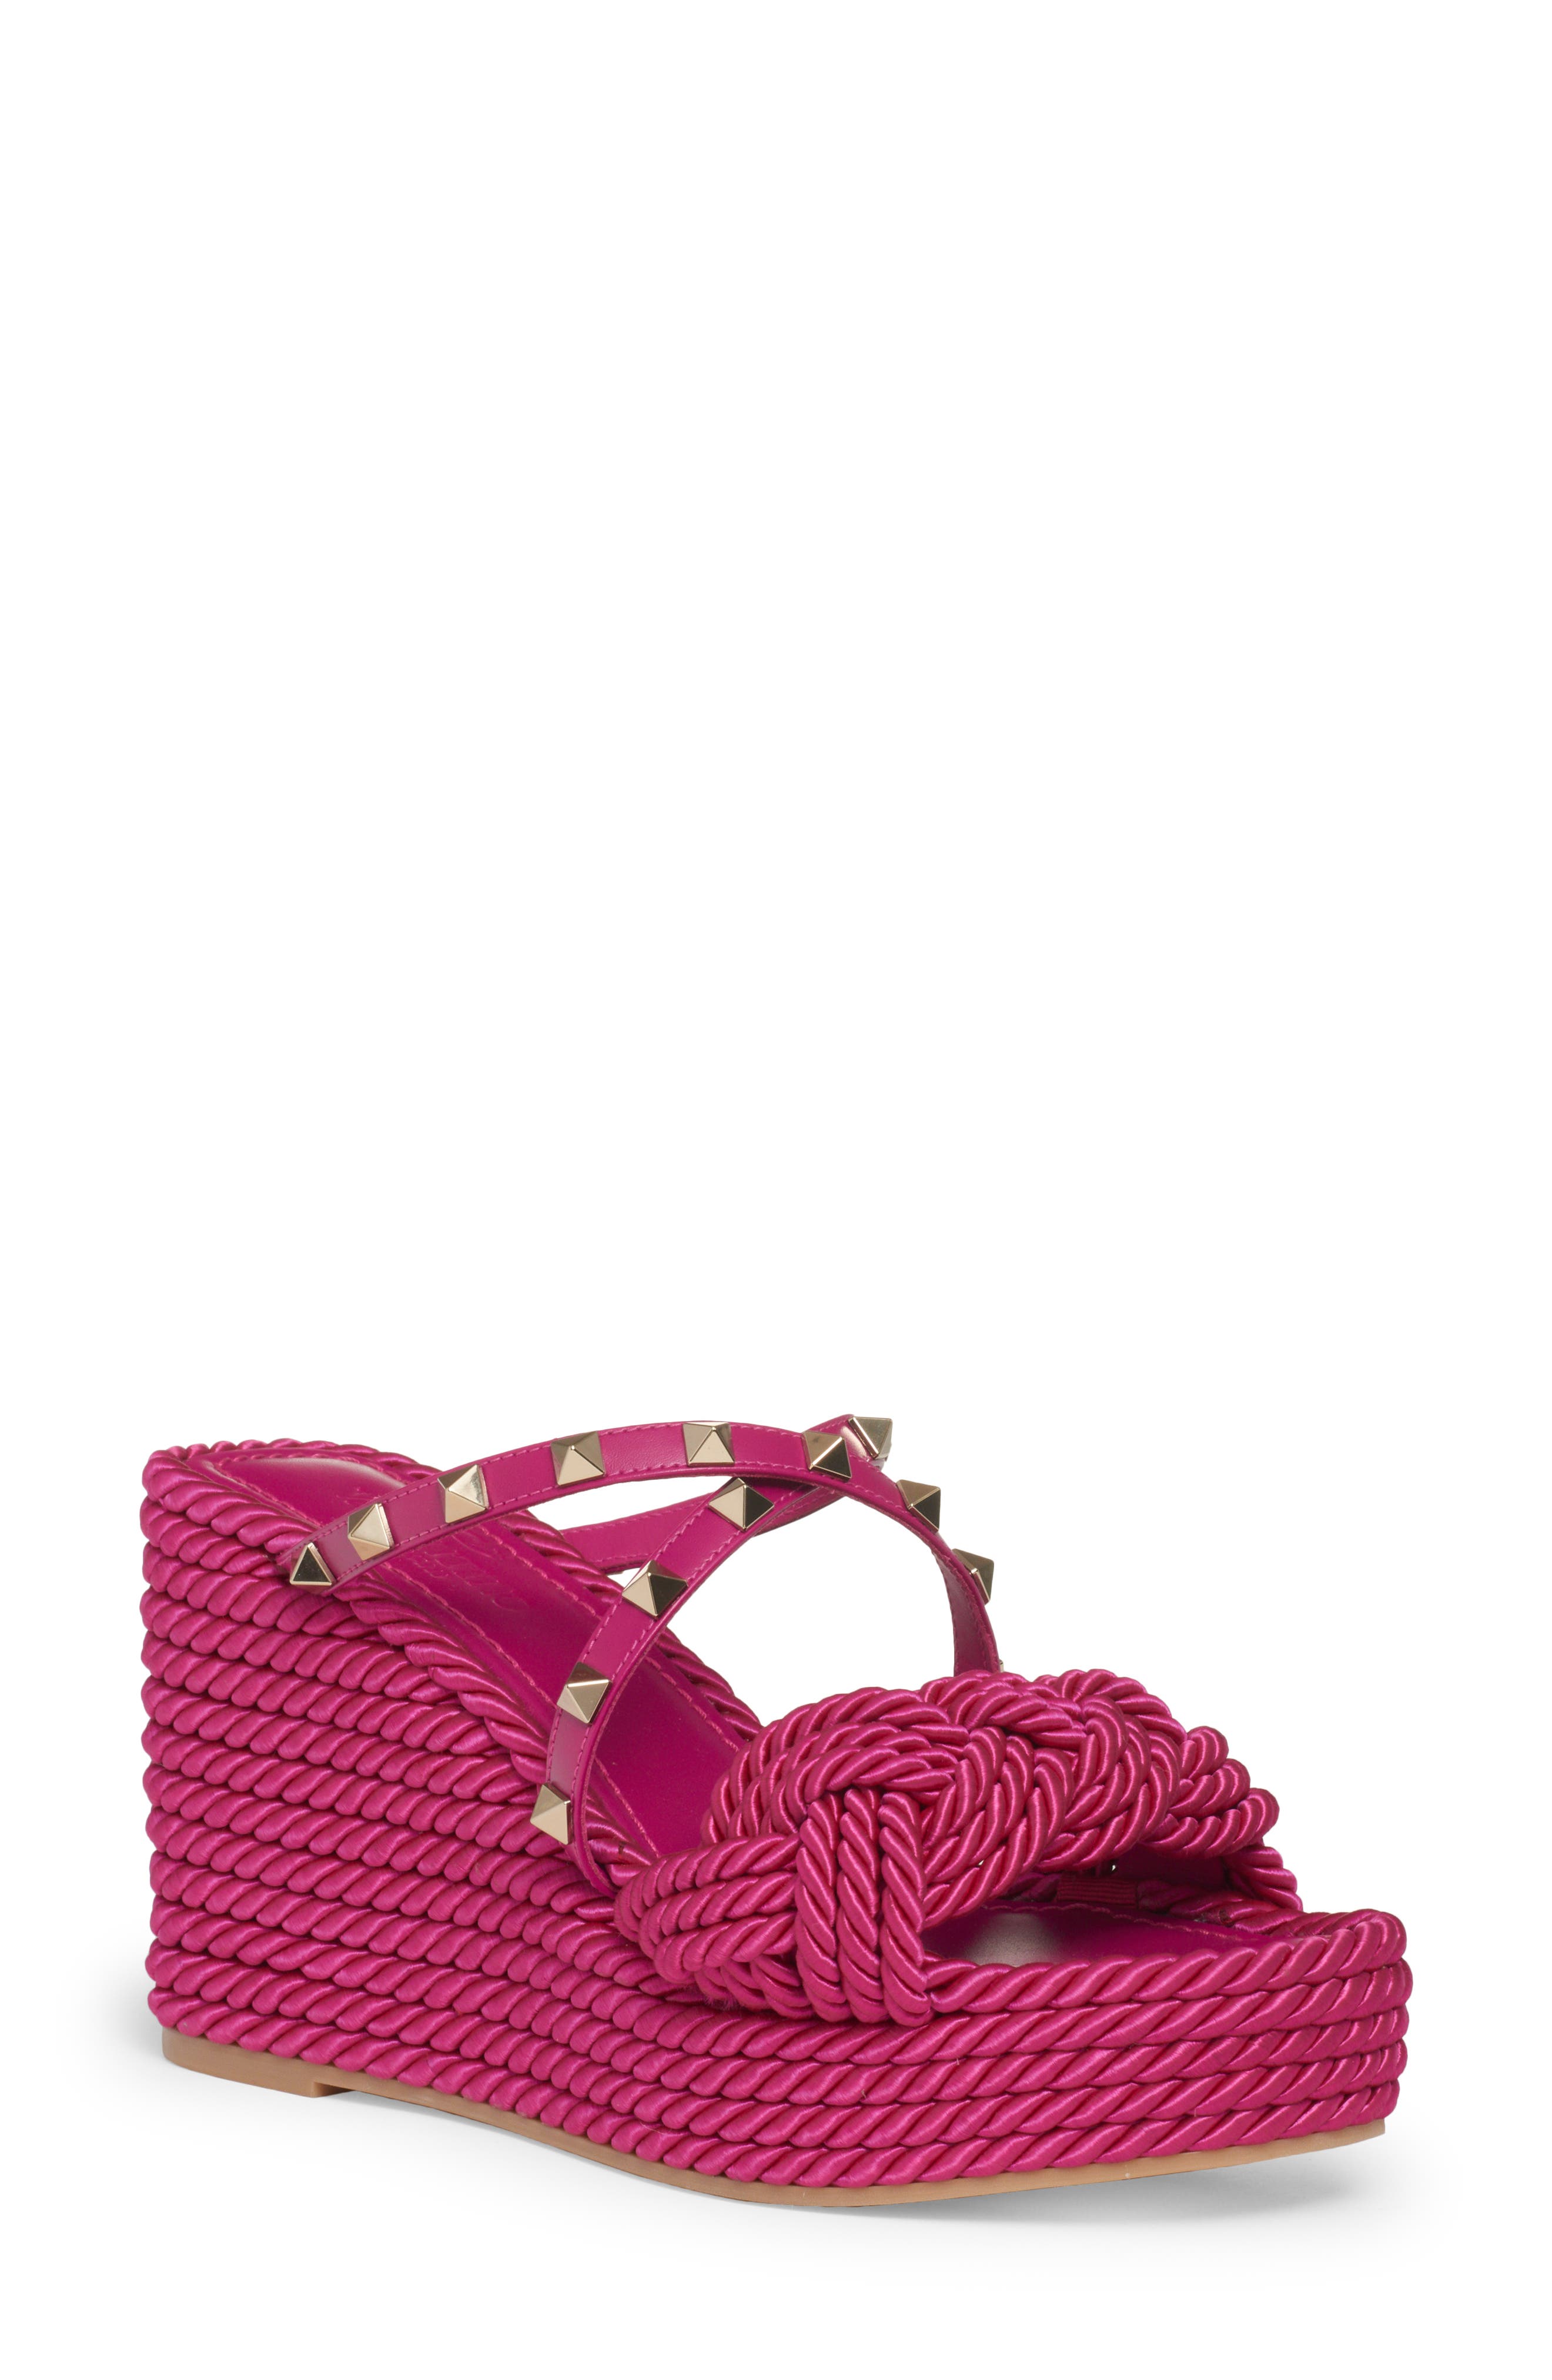 Shoes Sandals Espadrille Sandals Gant Espadrille Sandals pink flecked casual look 